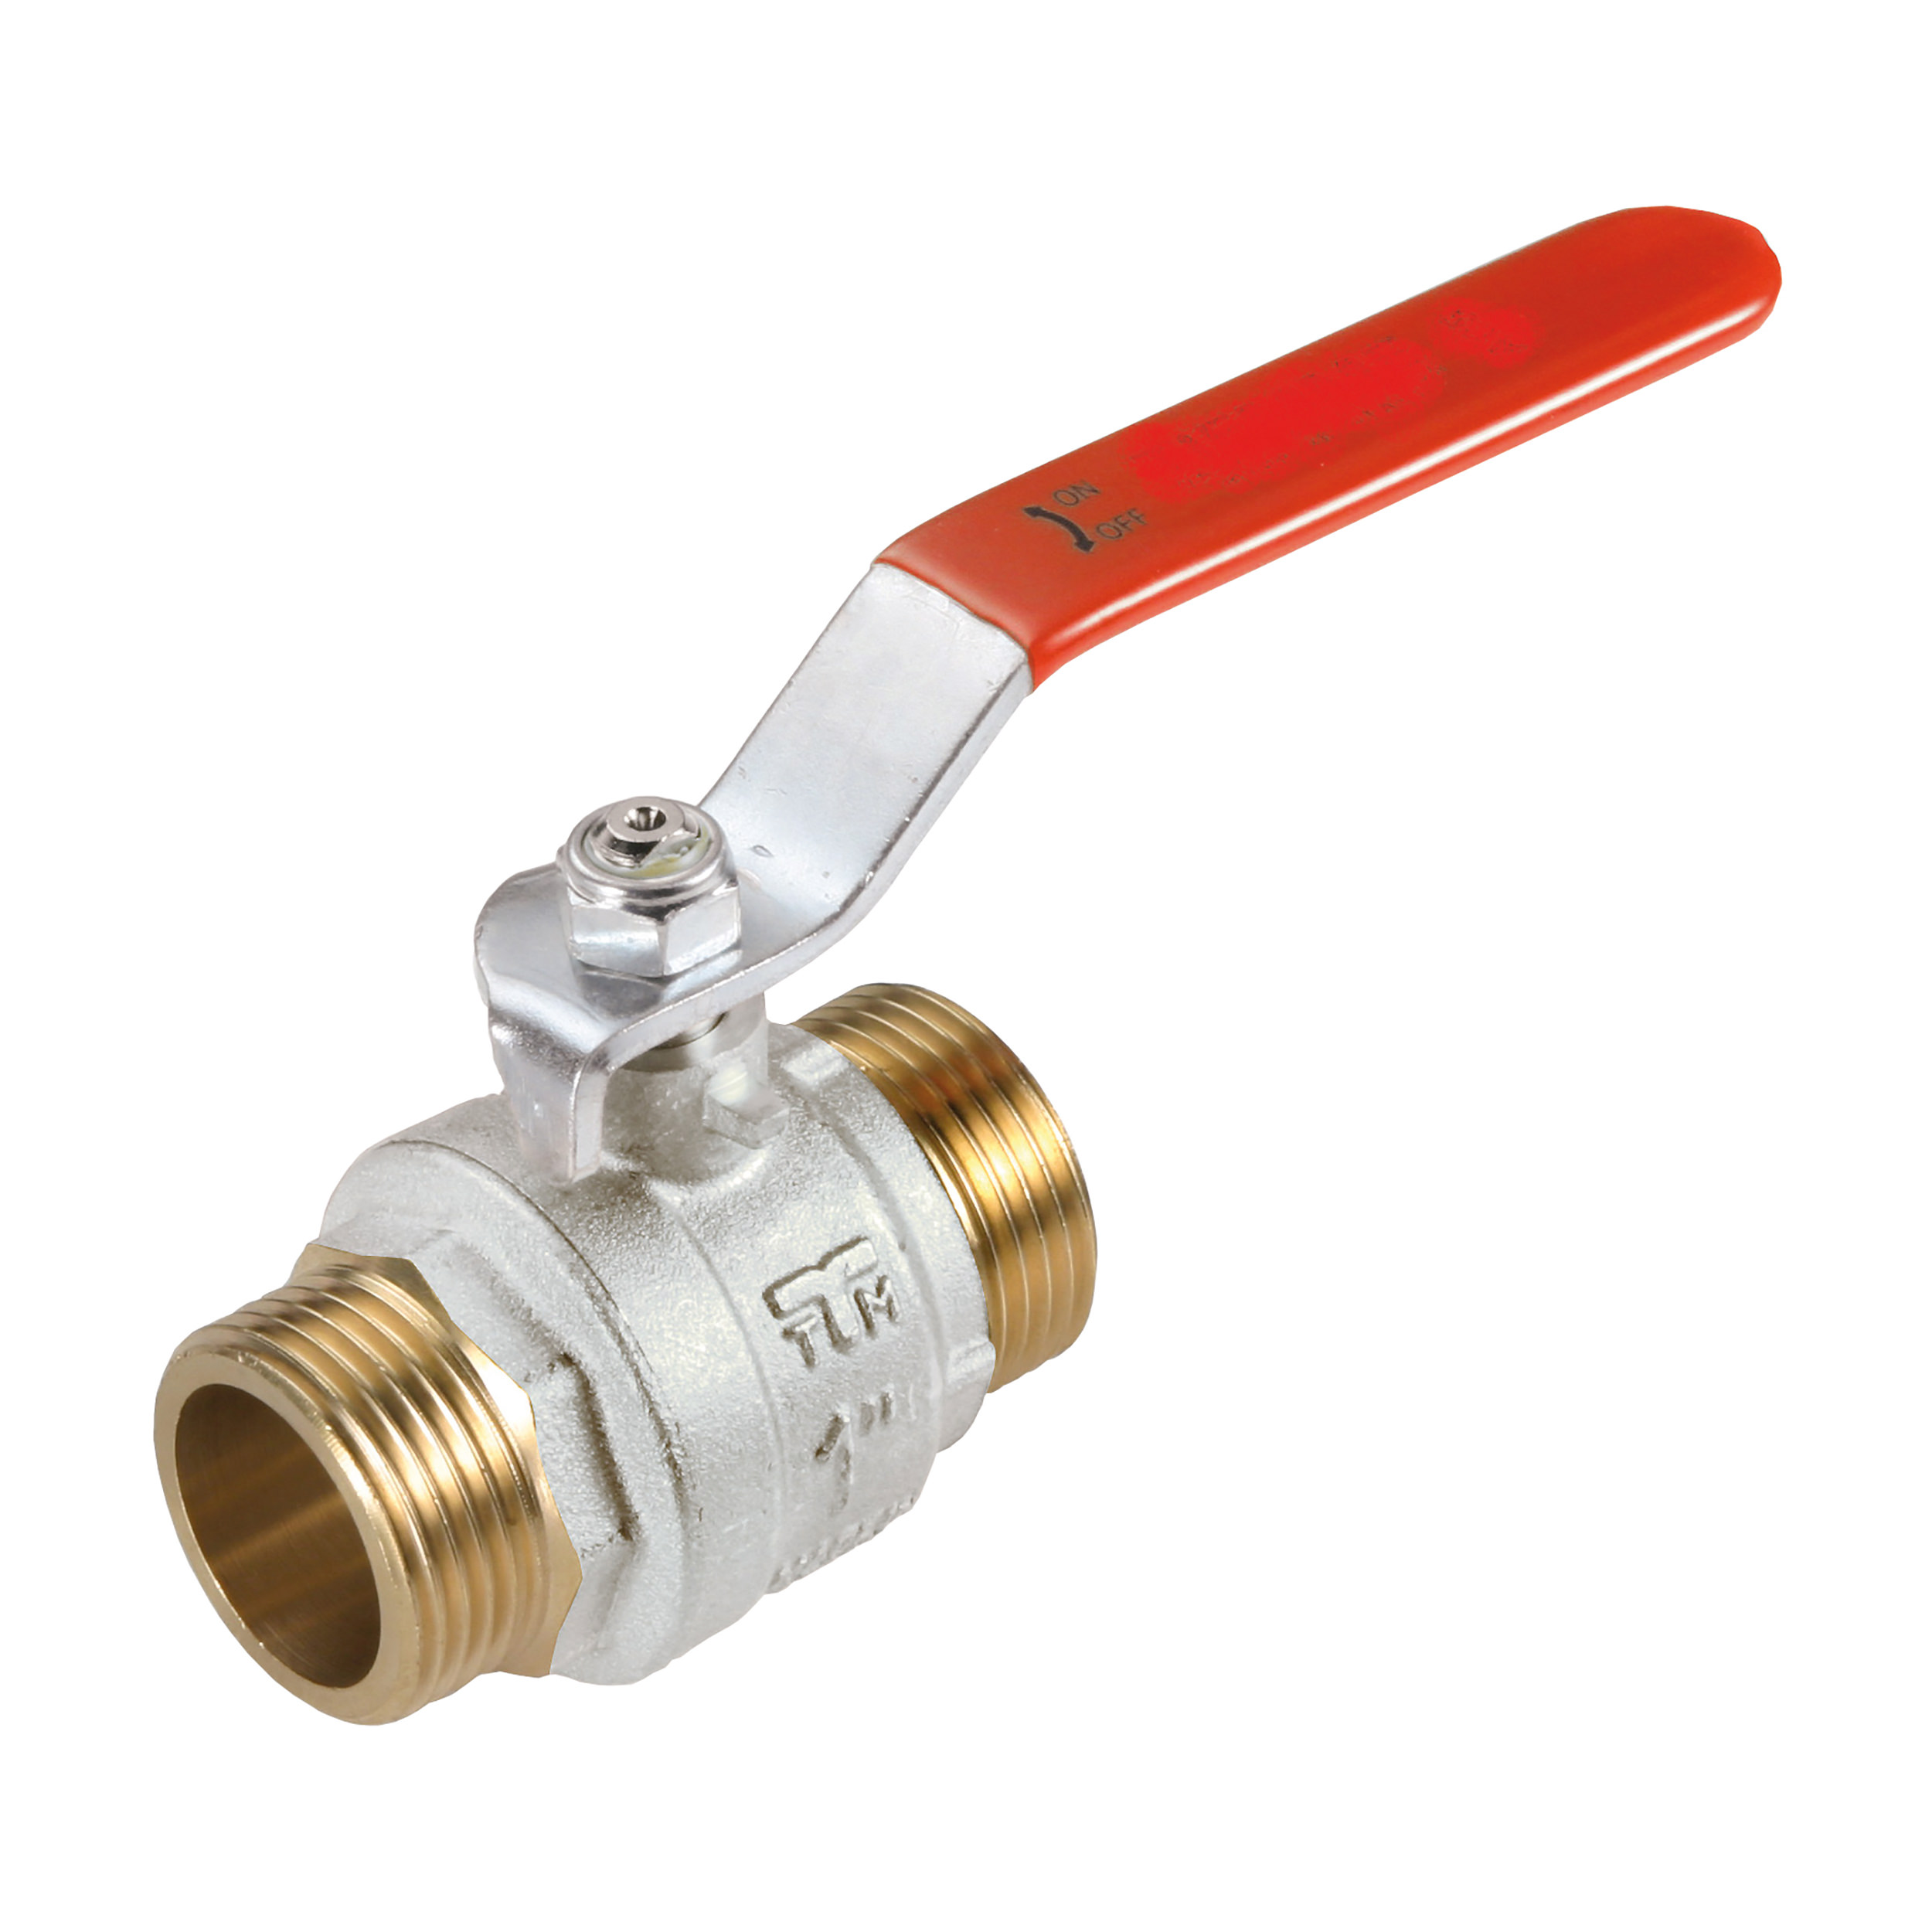 Ball valve w. metal lever, male thread